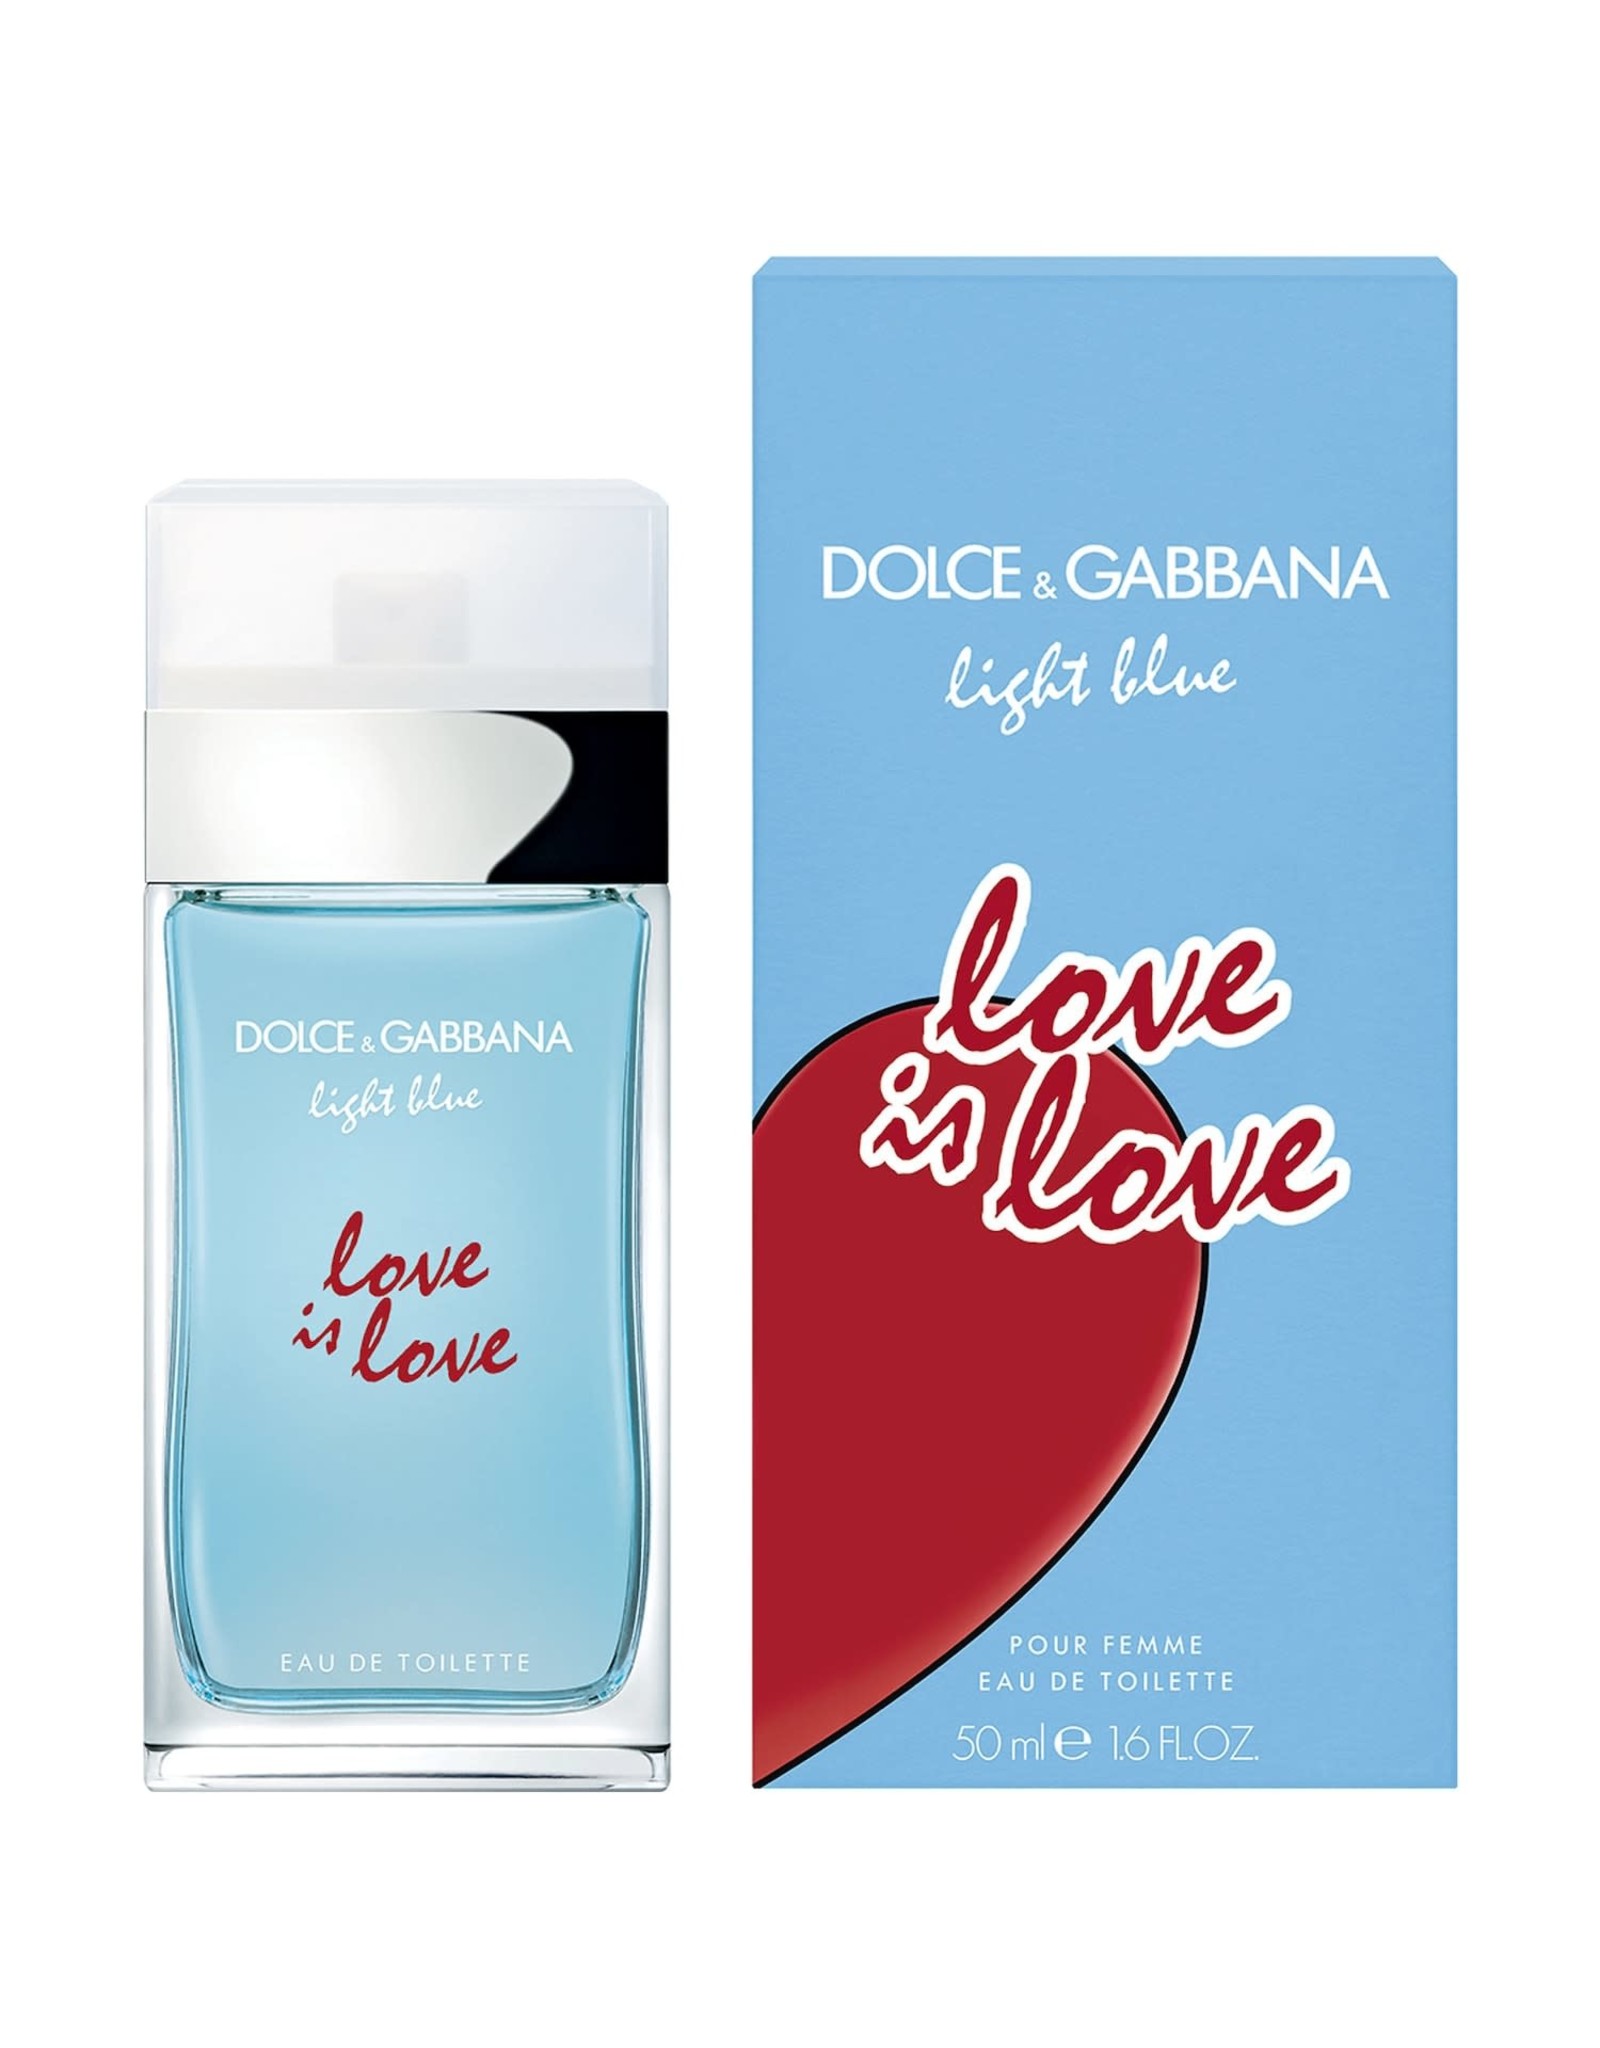 DOLCE & GABBANA DOLCE & GABBANA LIGHT BLUE LOVE IS LOVE POUR FEMME